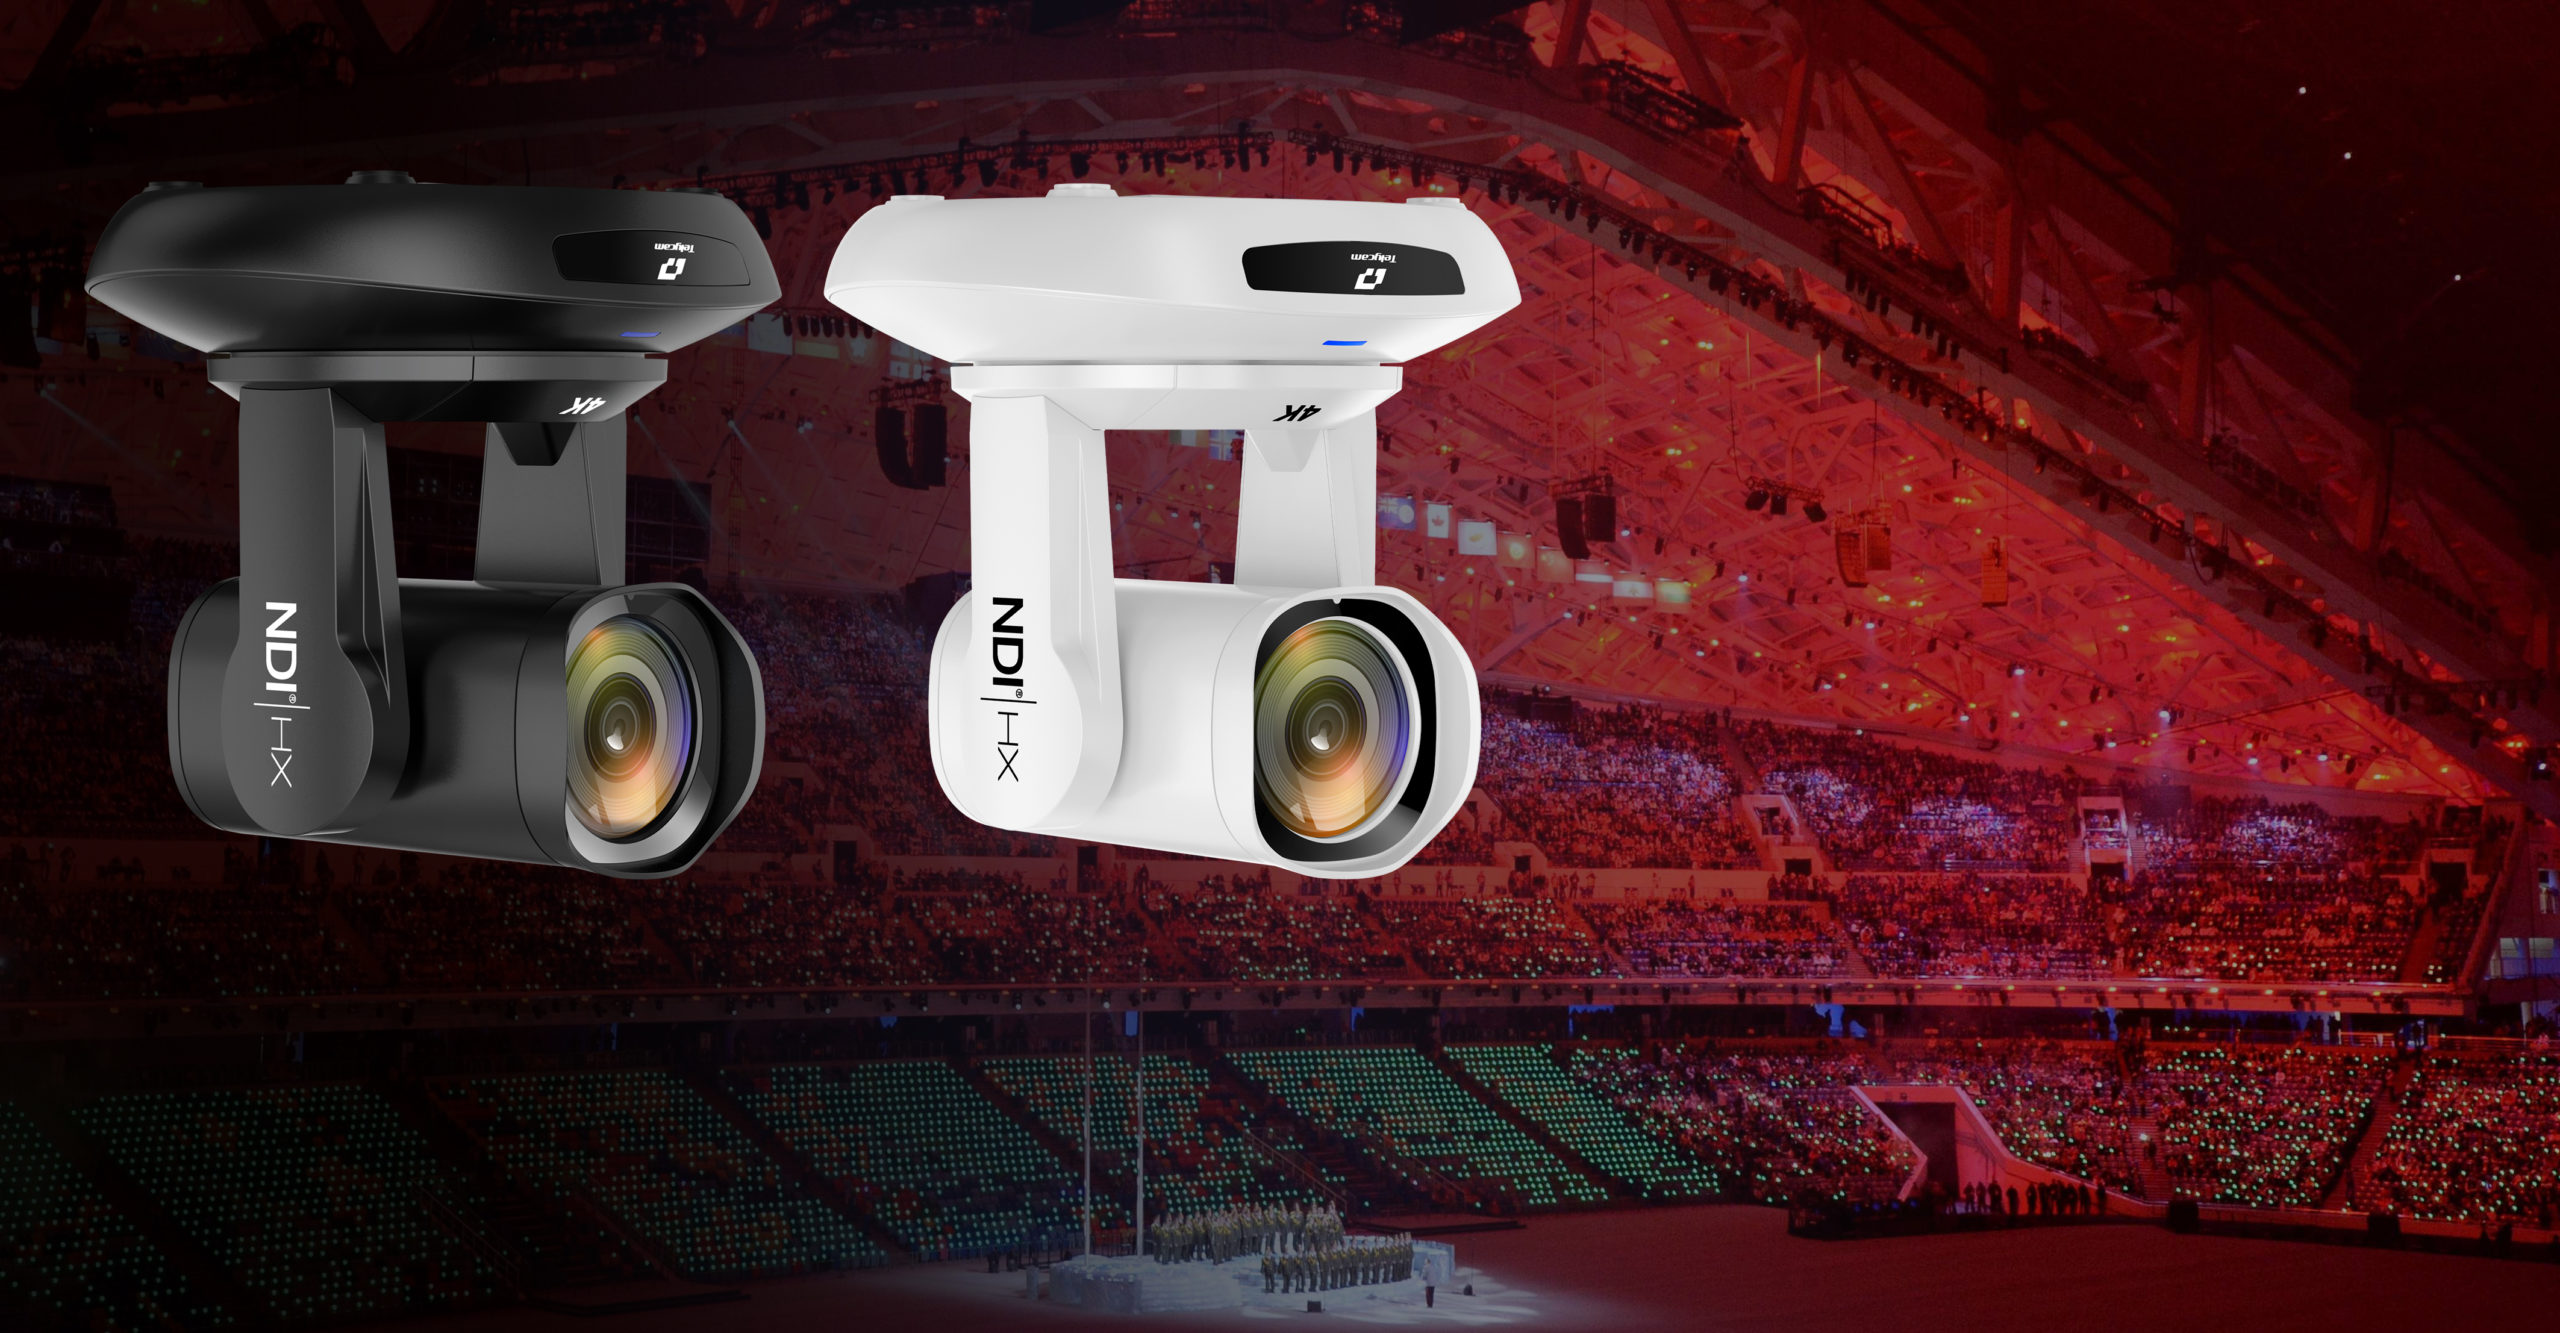 Sports & Esport Live Stream – Telycam